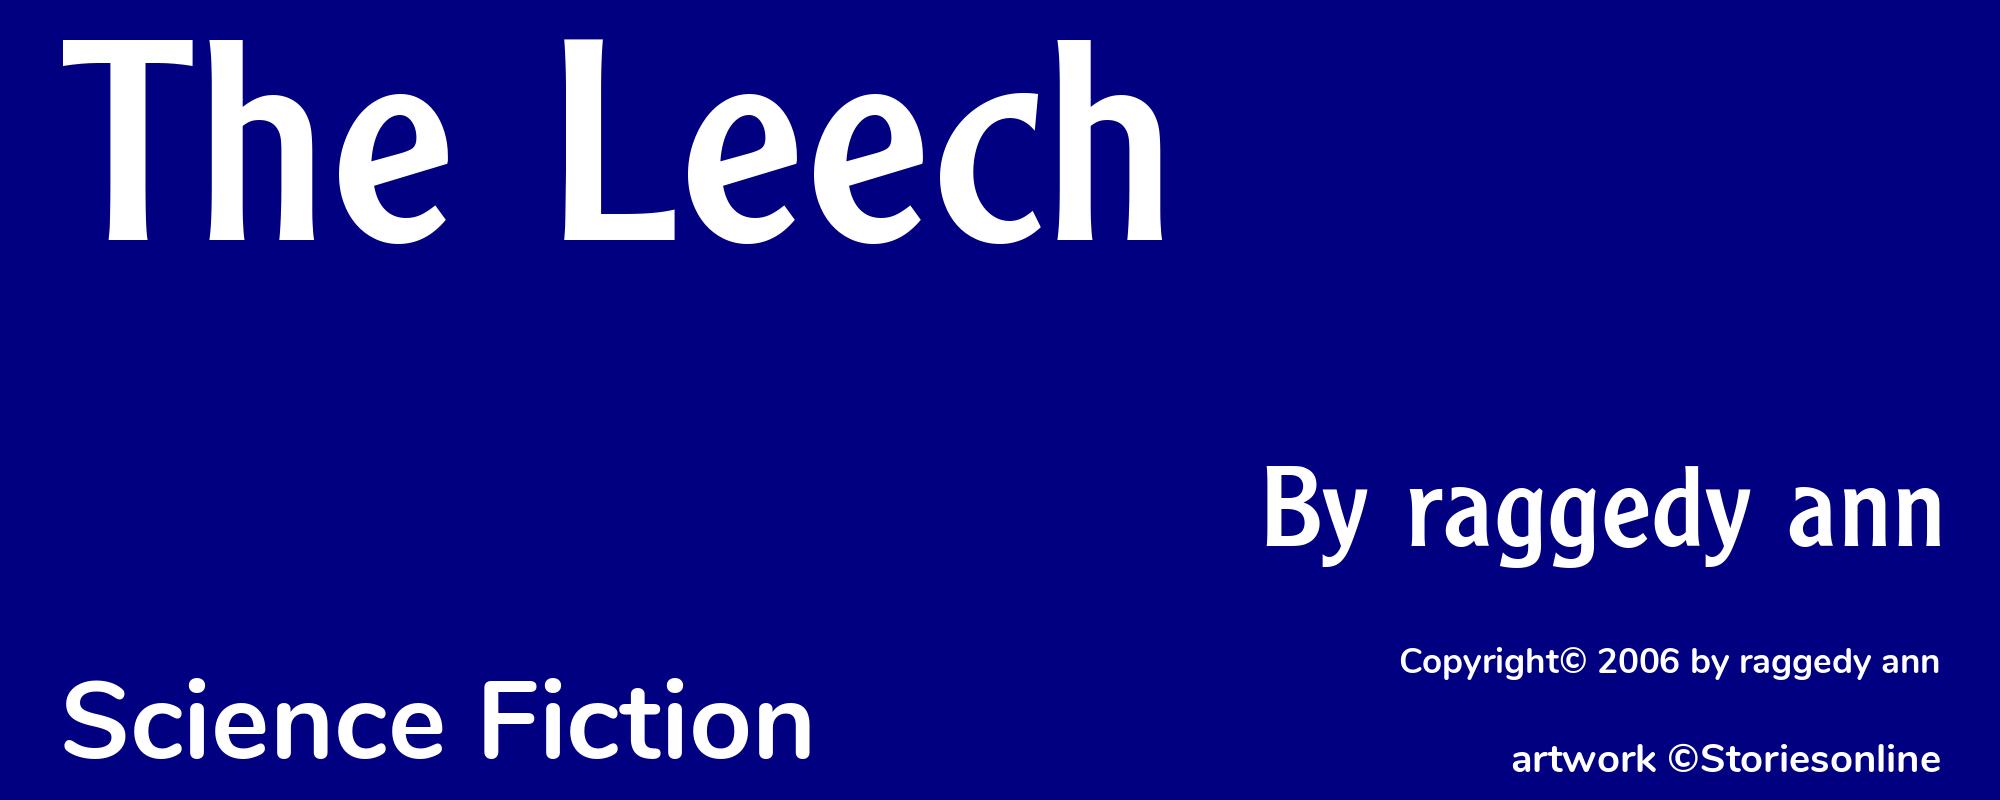 The Leech - Cover